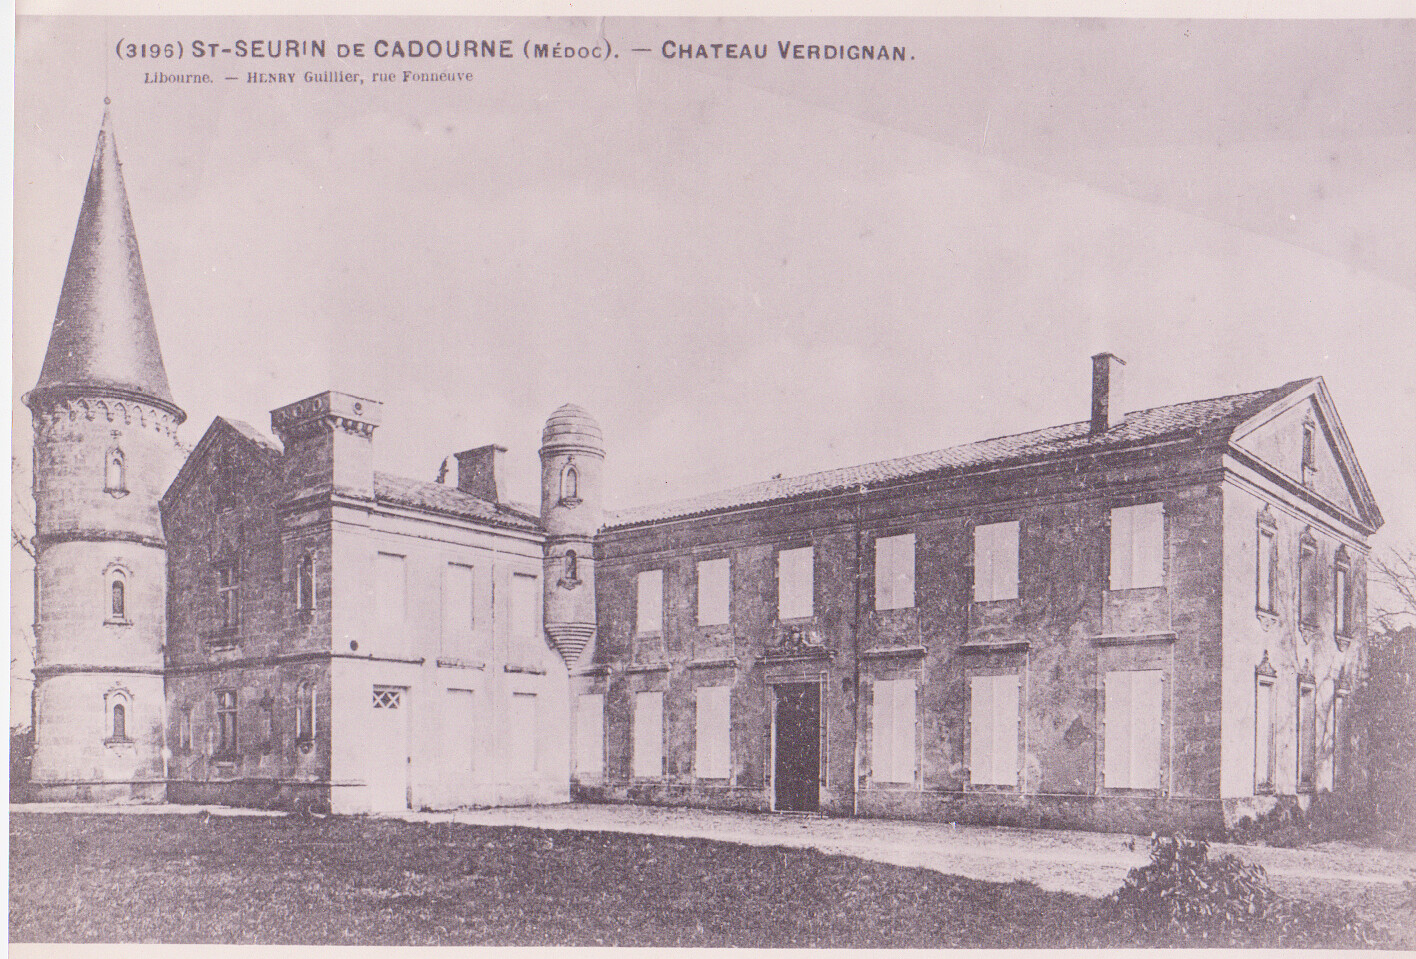 Ch Verdignan er den eldste vingården i Saint Seurin de Cadourne